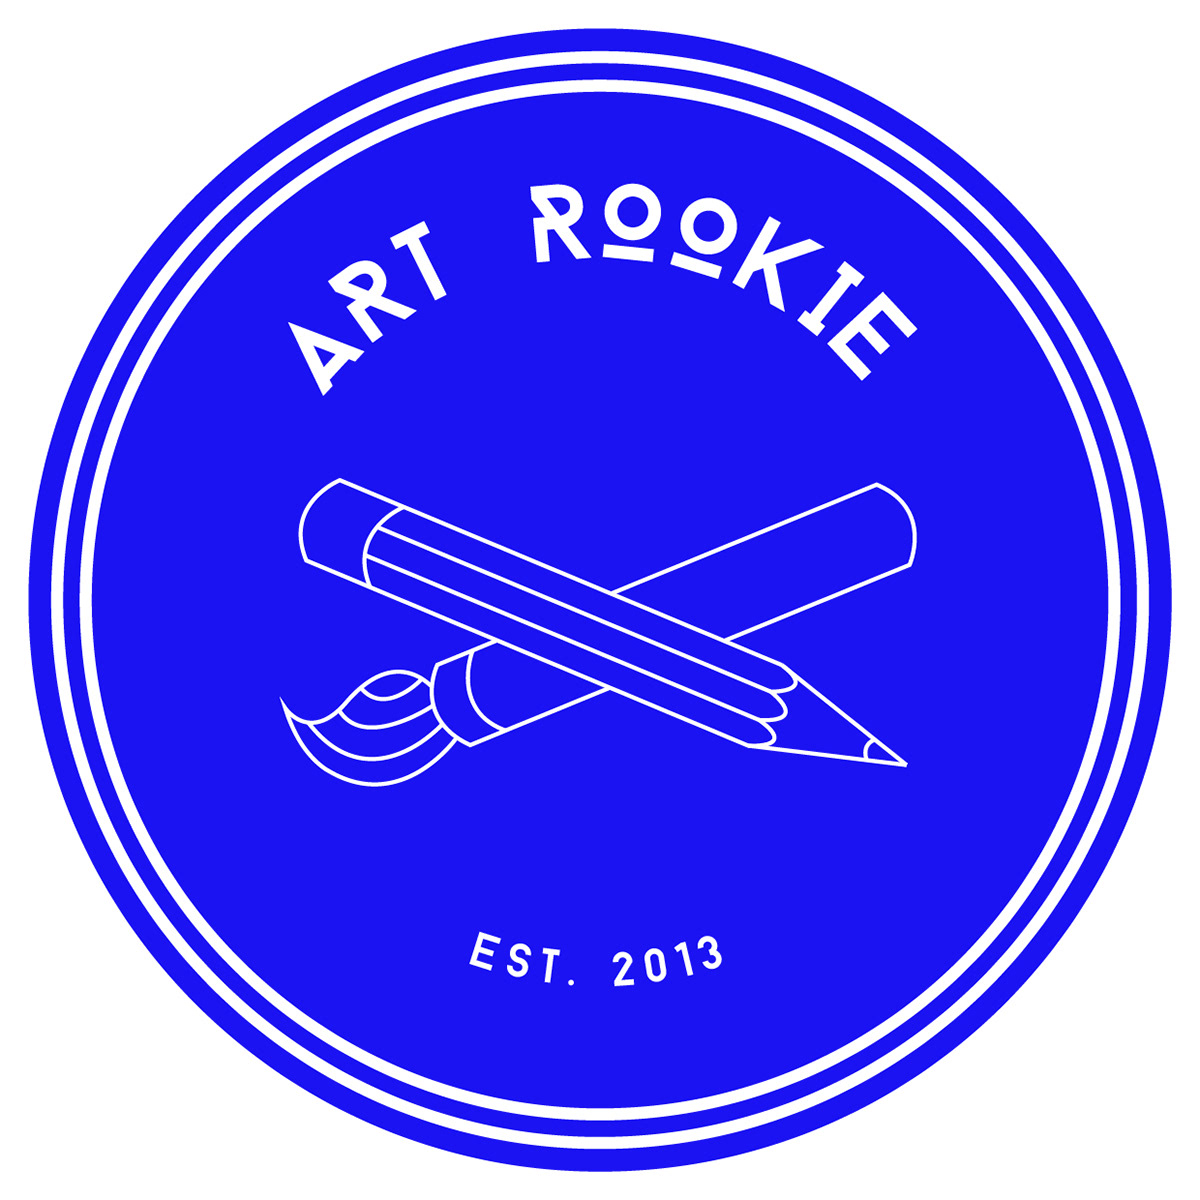 art rookie Youtube Channel art history art theory